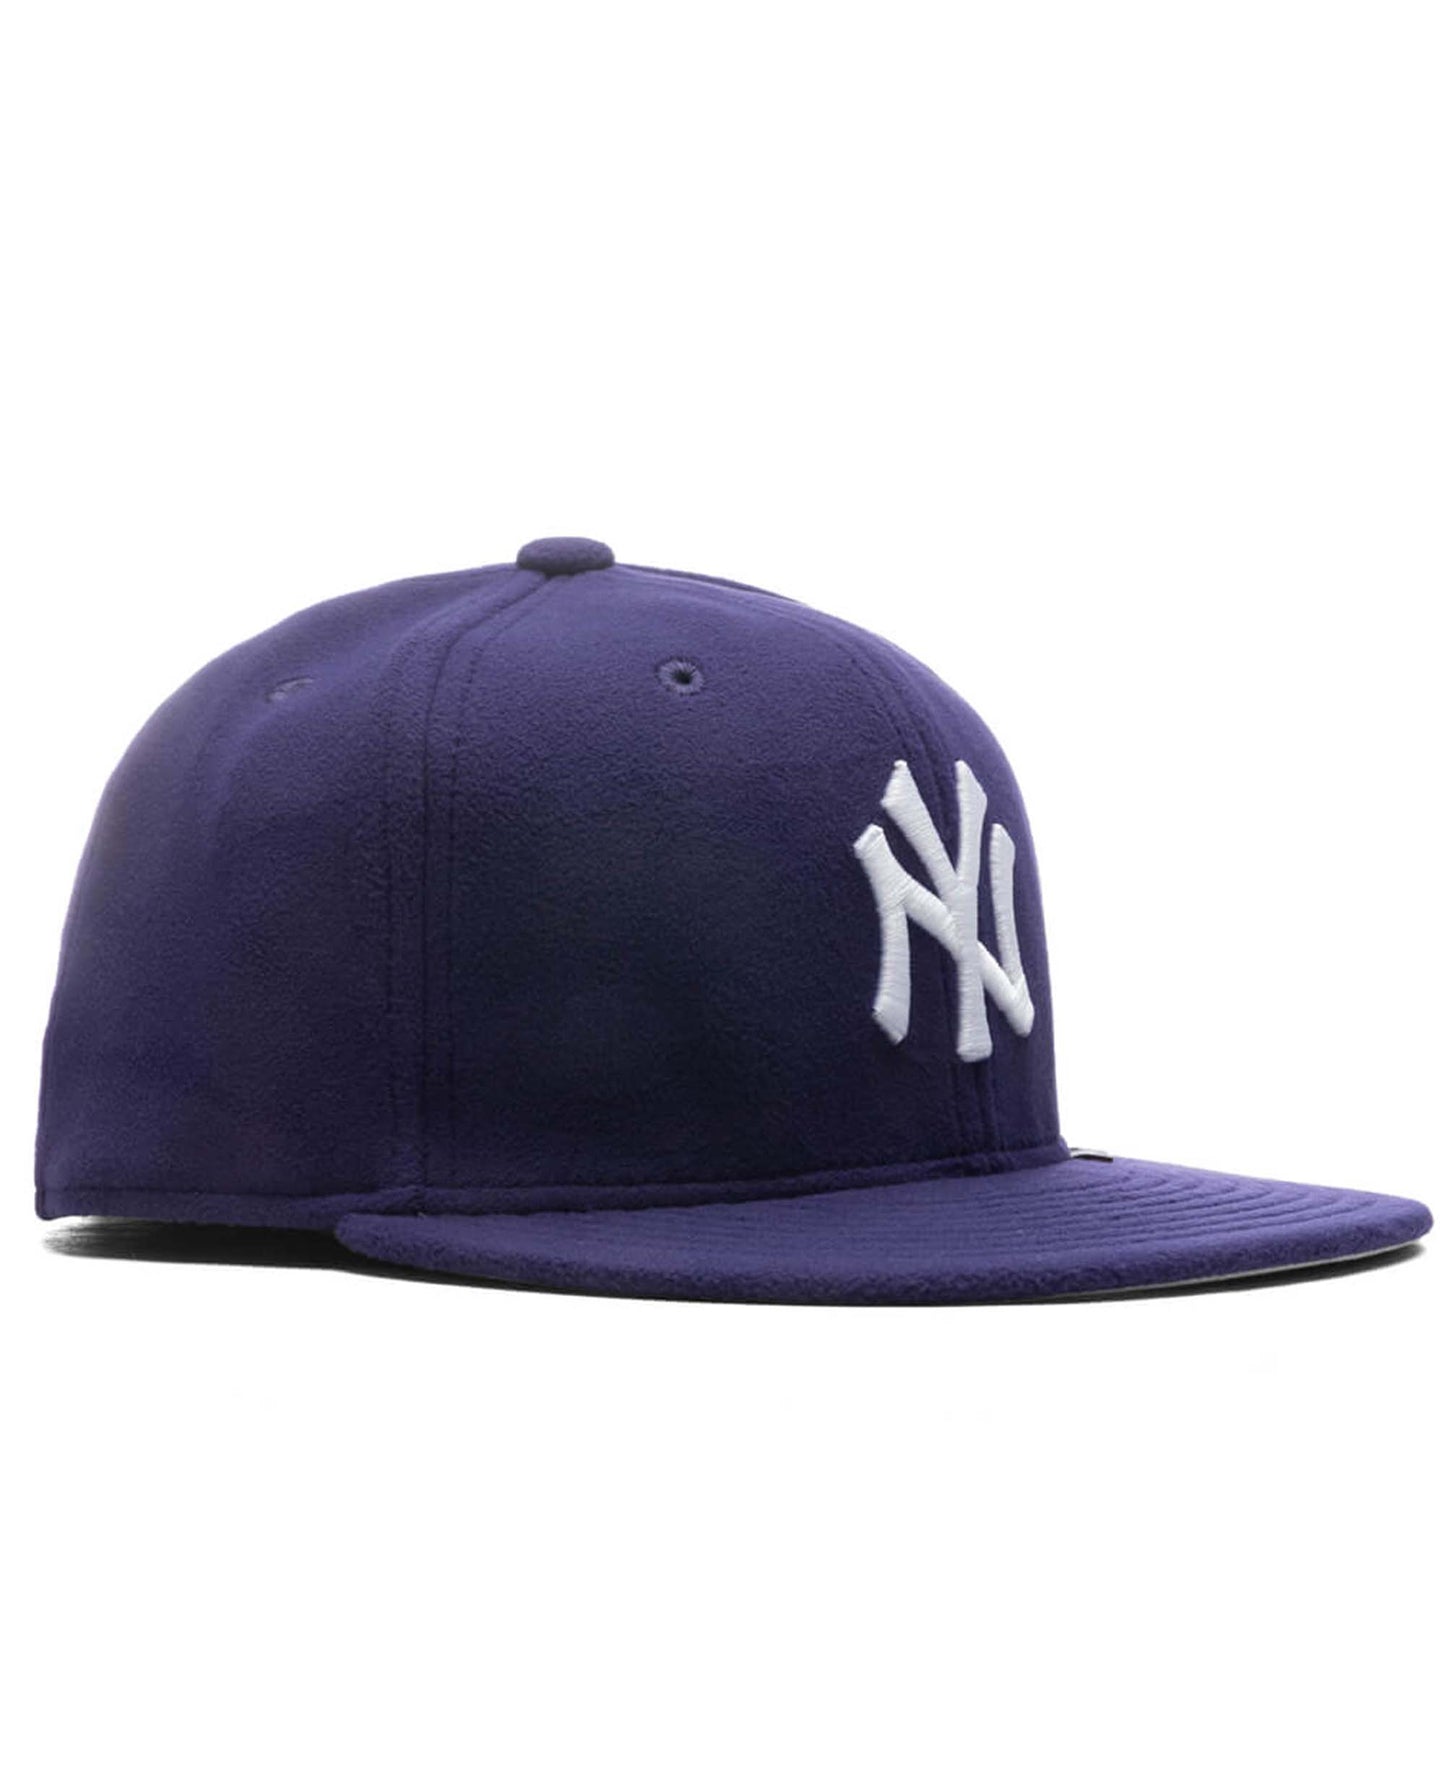  New Era One Size New York Yankees, Black : General